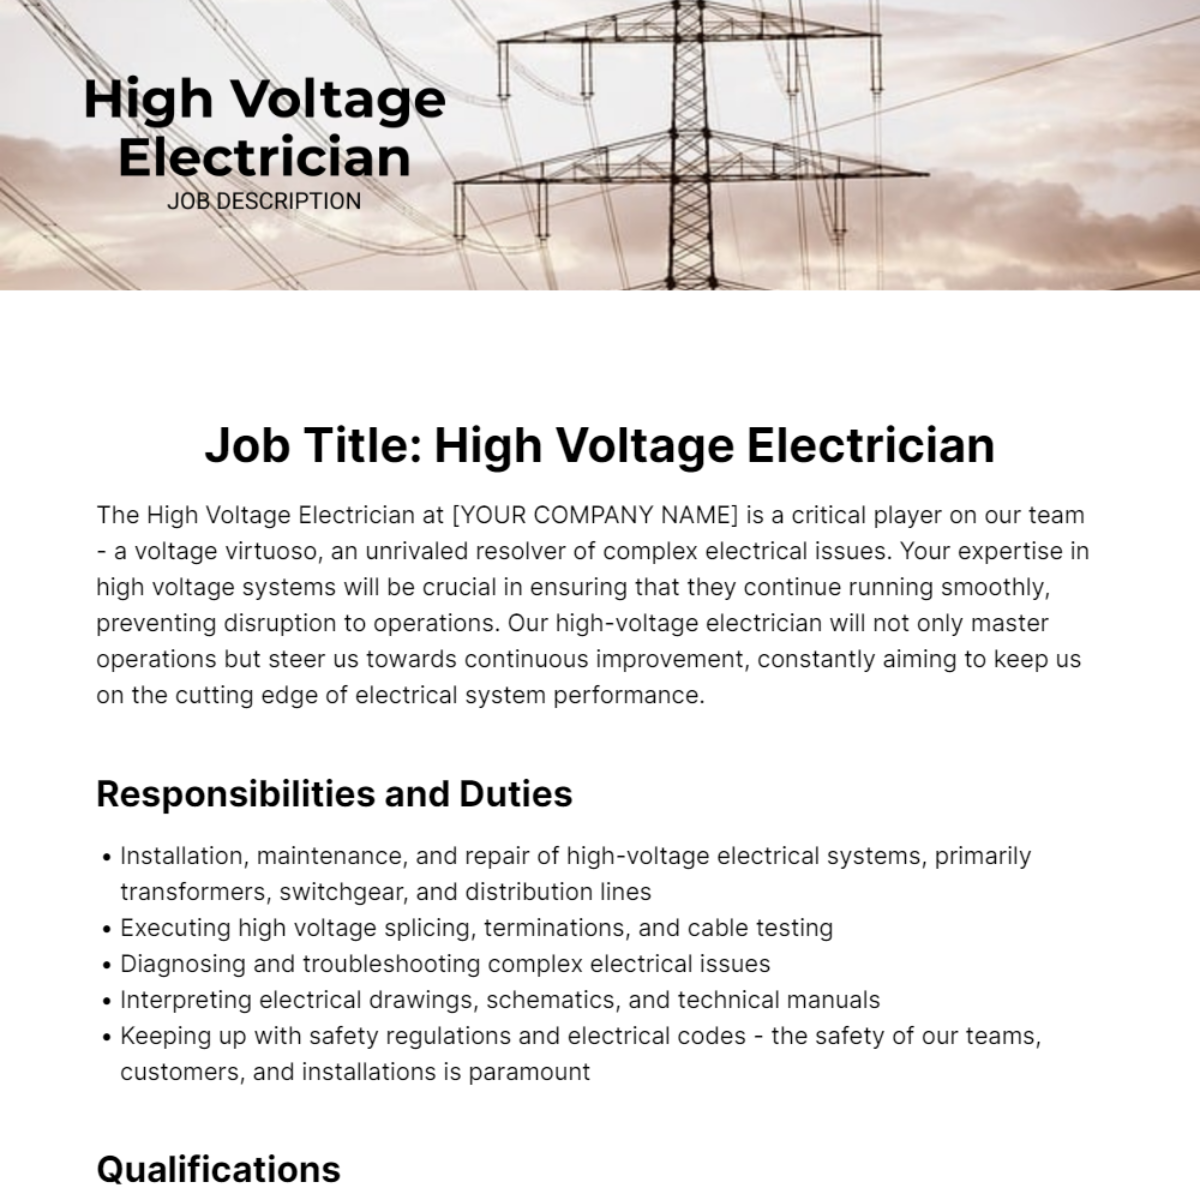 High Voltage Electrician Job Description Template